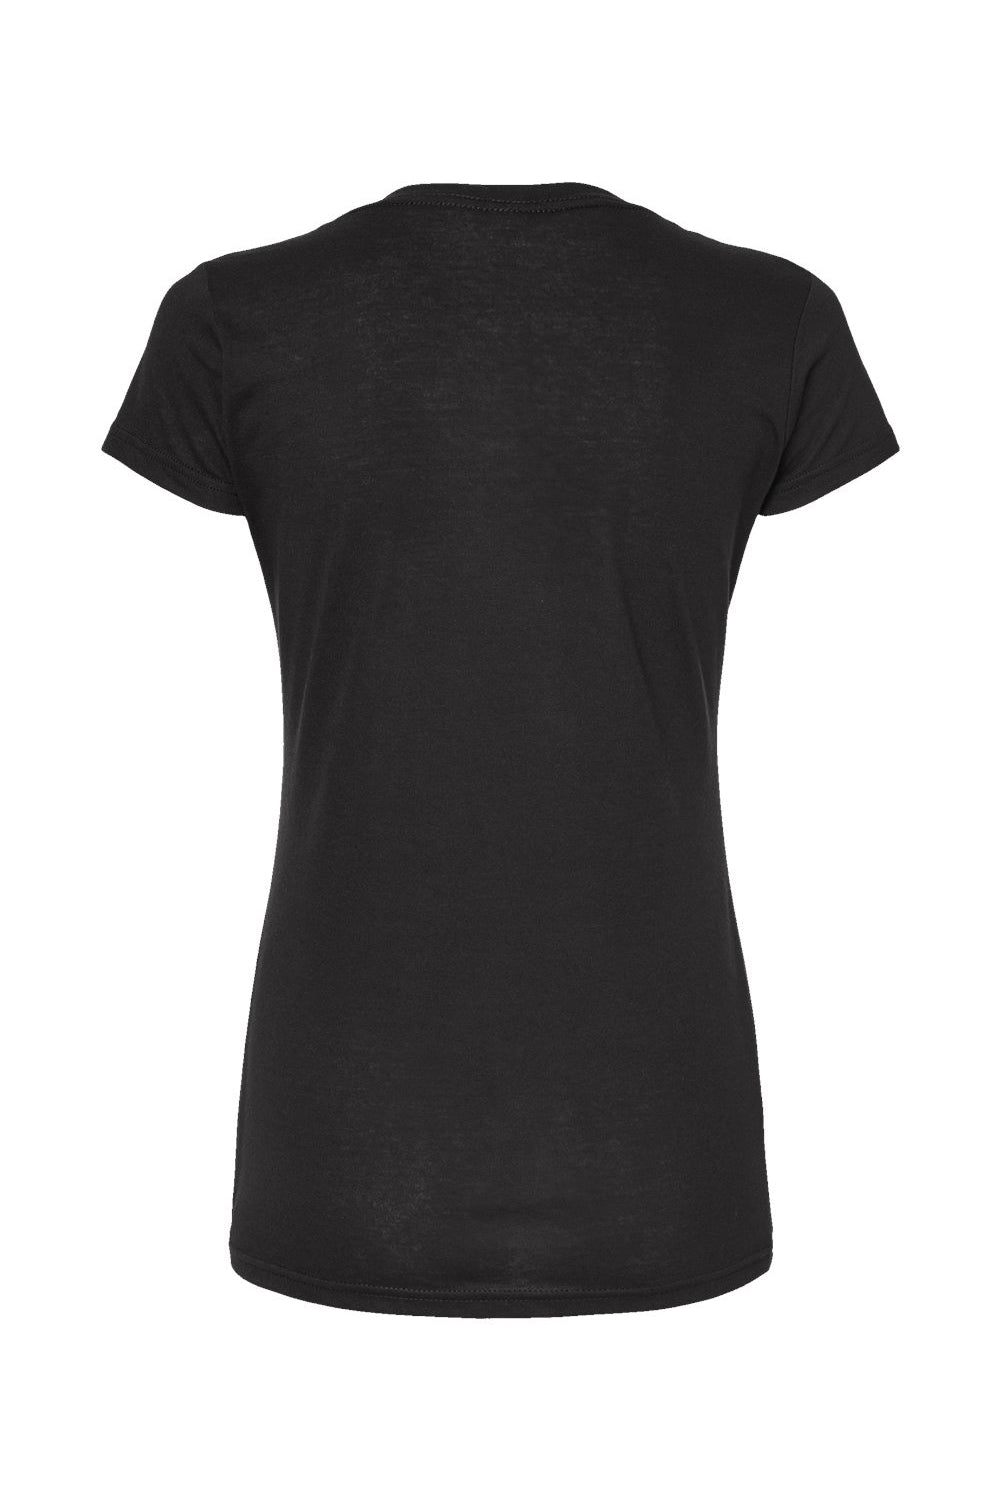 Tultex 244 Womens Poly-Rich Short Sleeve V-Neck T-Shirt Black Flat Back